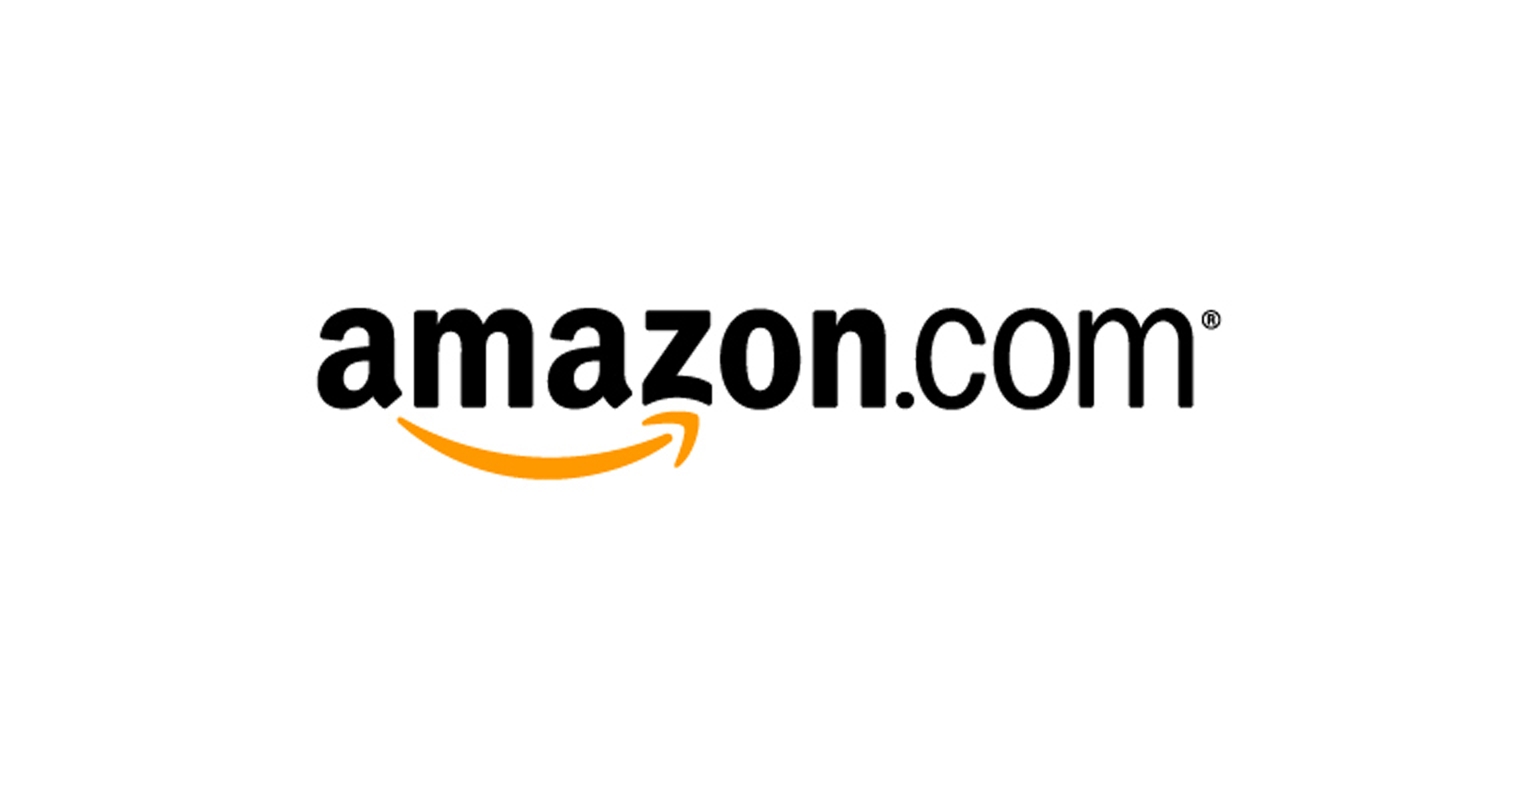 Karapari com. Амазон эмблема. The Amazon. Amazon.com. Amazon без фона.